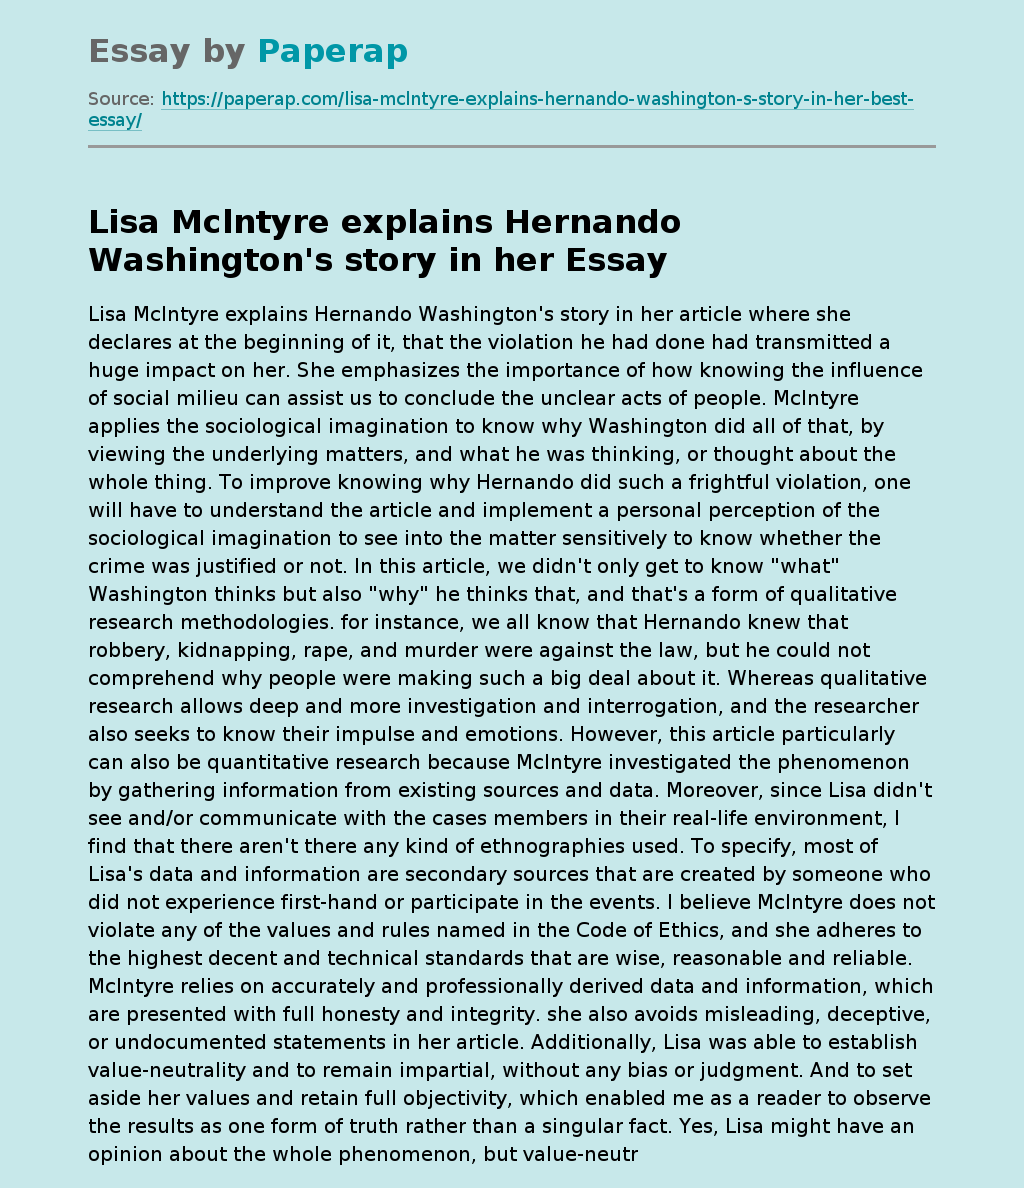 Lisa Mclntyre explains Hernando Washington's story in her